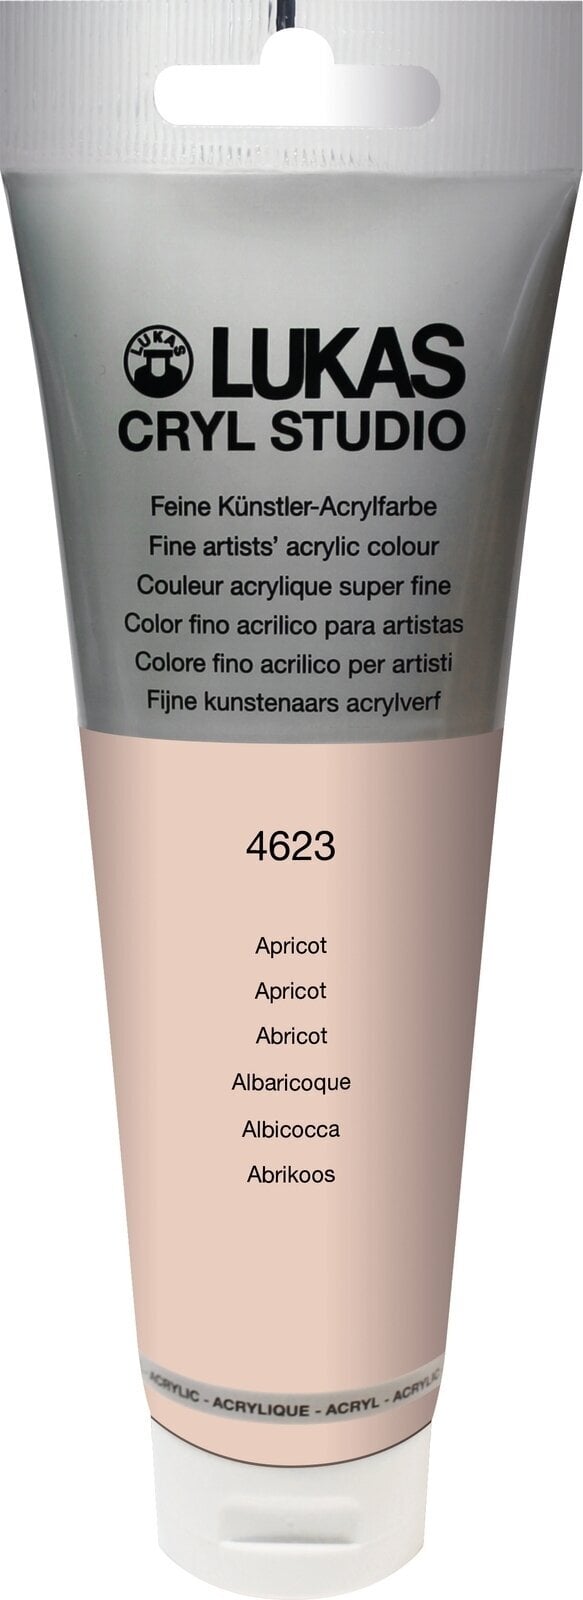 Acrylfarbe Lukas Cryl Studio Acrylic Paint Plastic Tube Acrylfarbe Aprikose 125 ml 1 Stck